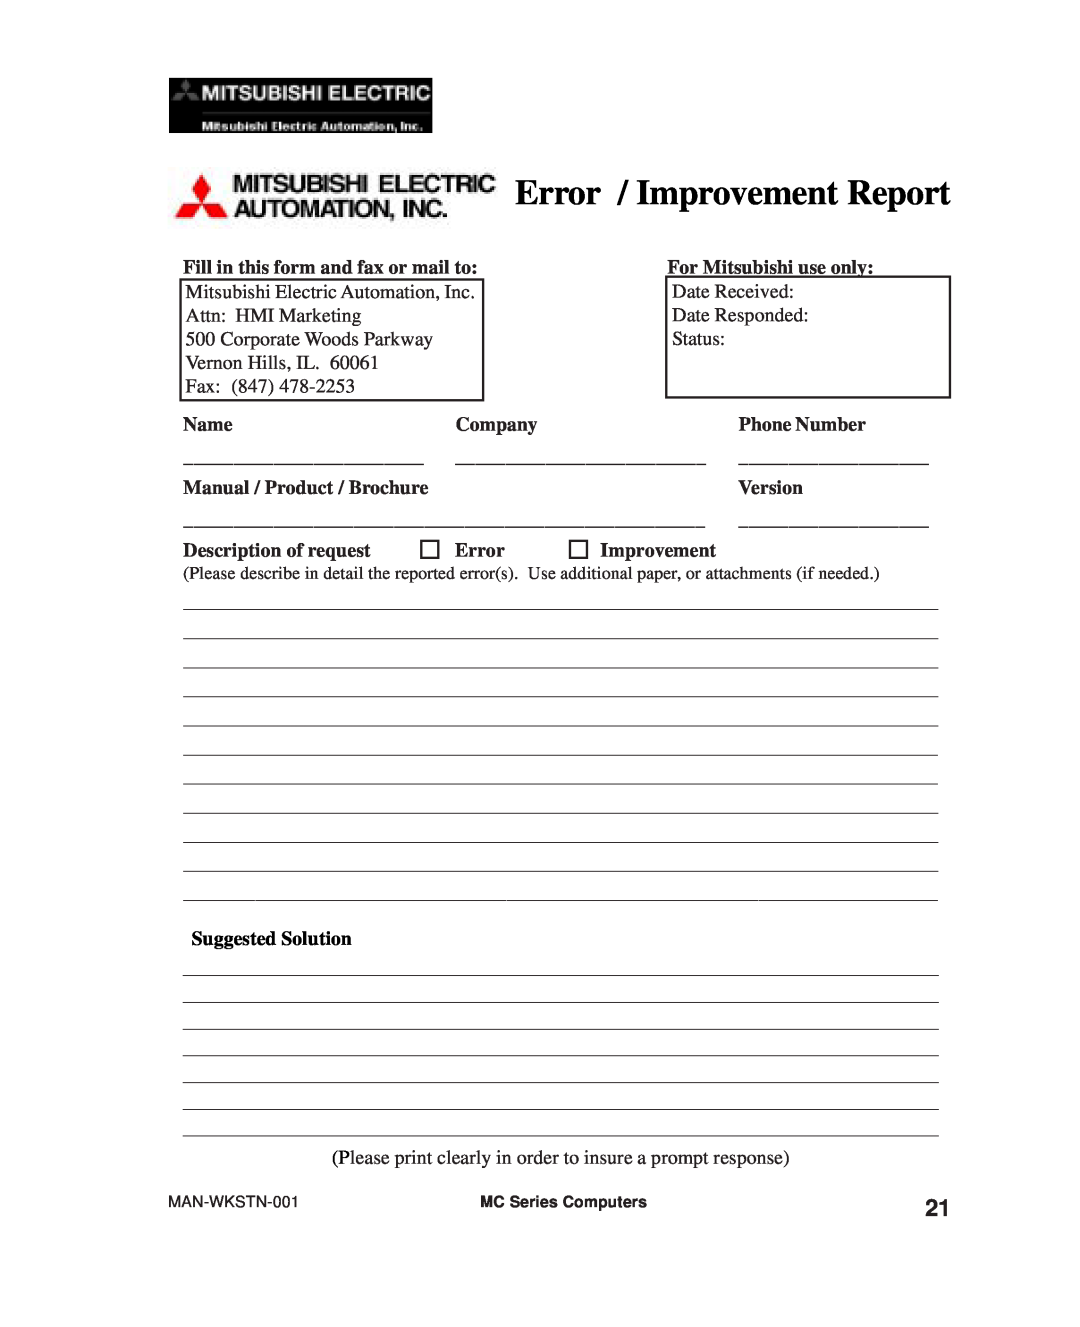 Mitsubishi Electronics MC300 manual Error / Improvement Report, Mitsubishi Electric Automation, Inc Attn HMI Marketing 